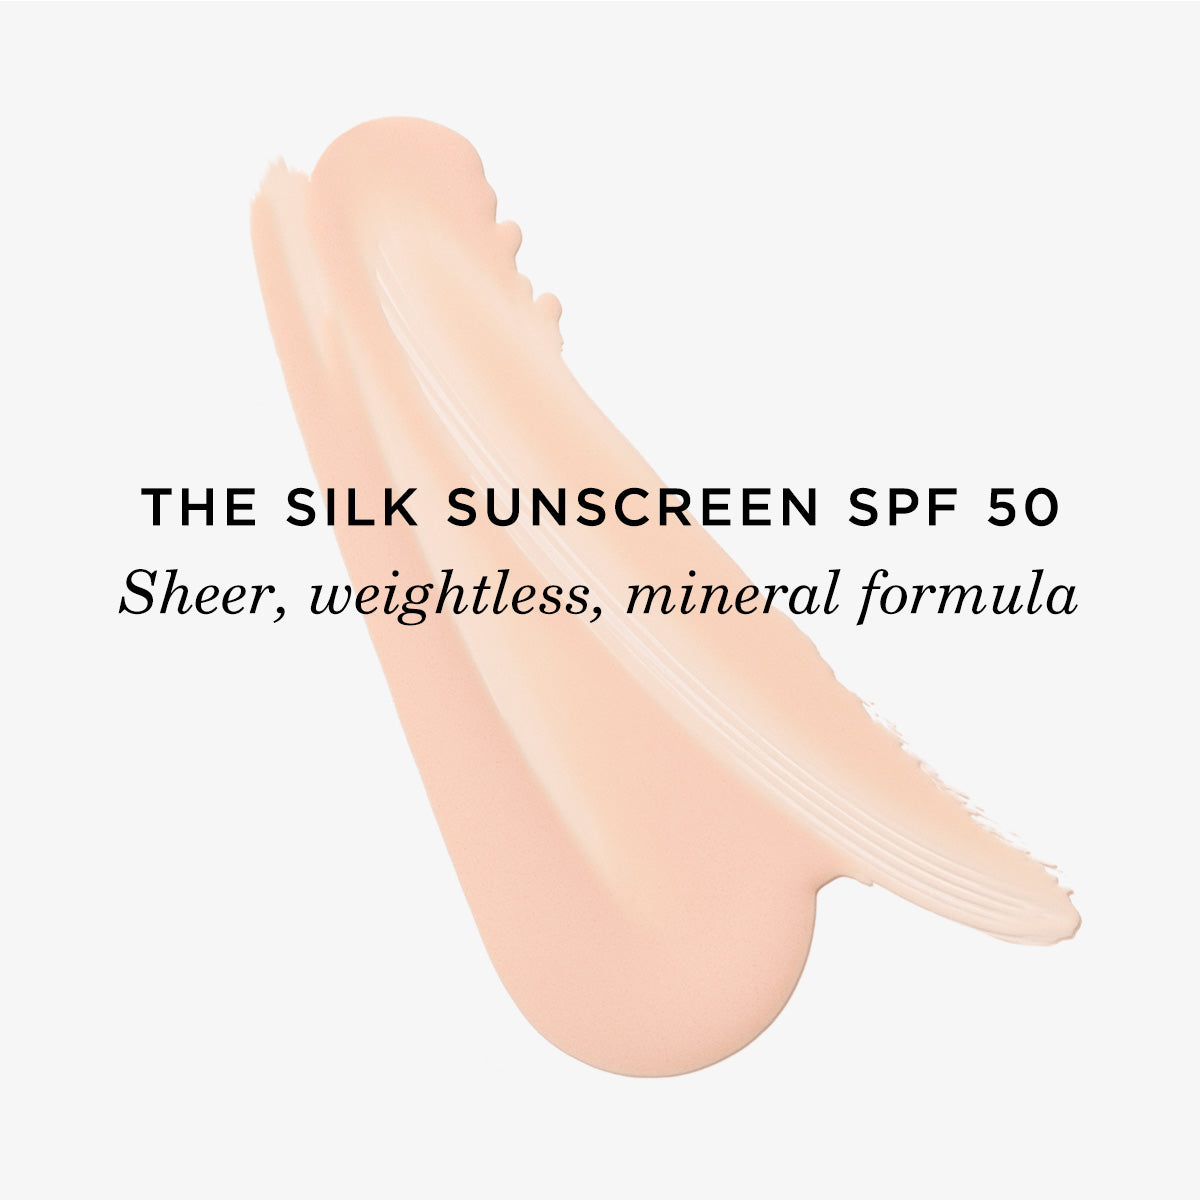 The Silk Sunscreen SPF 50